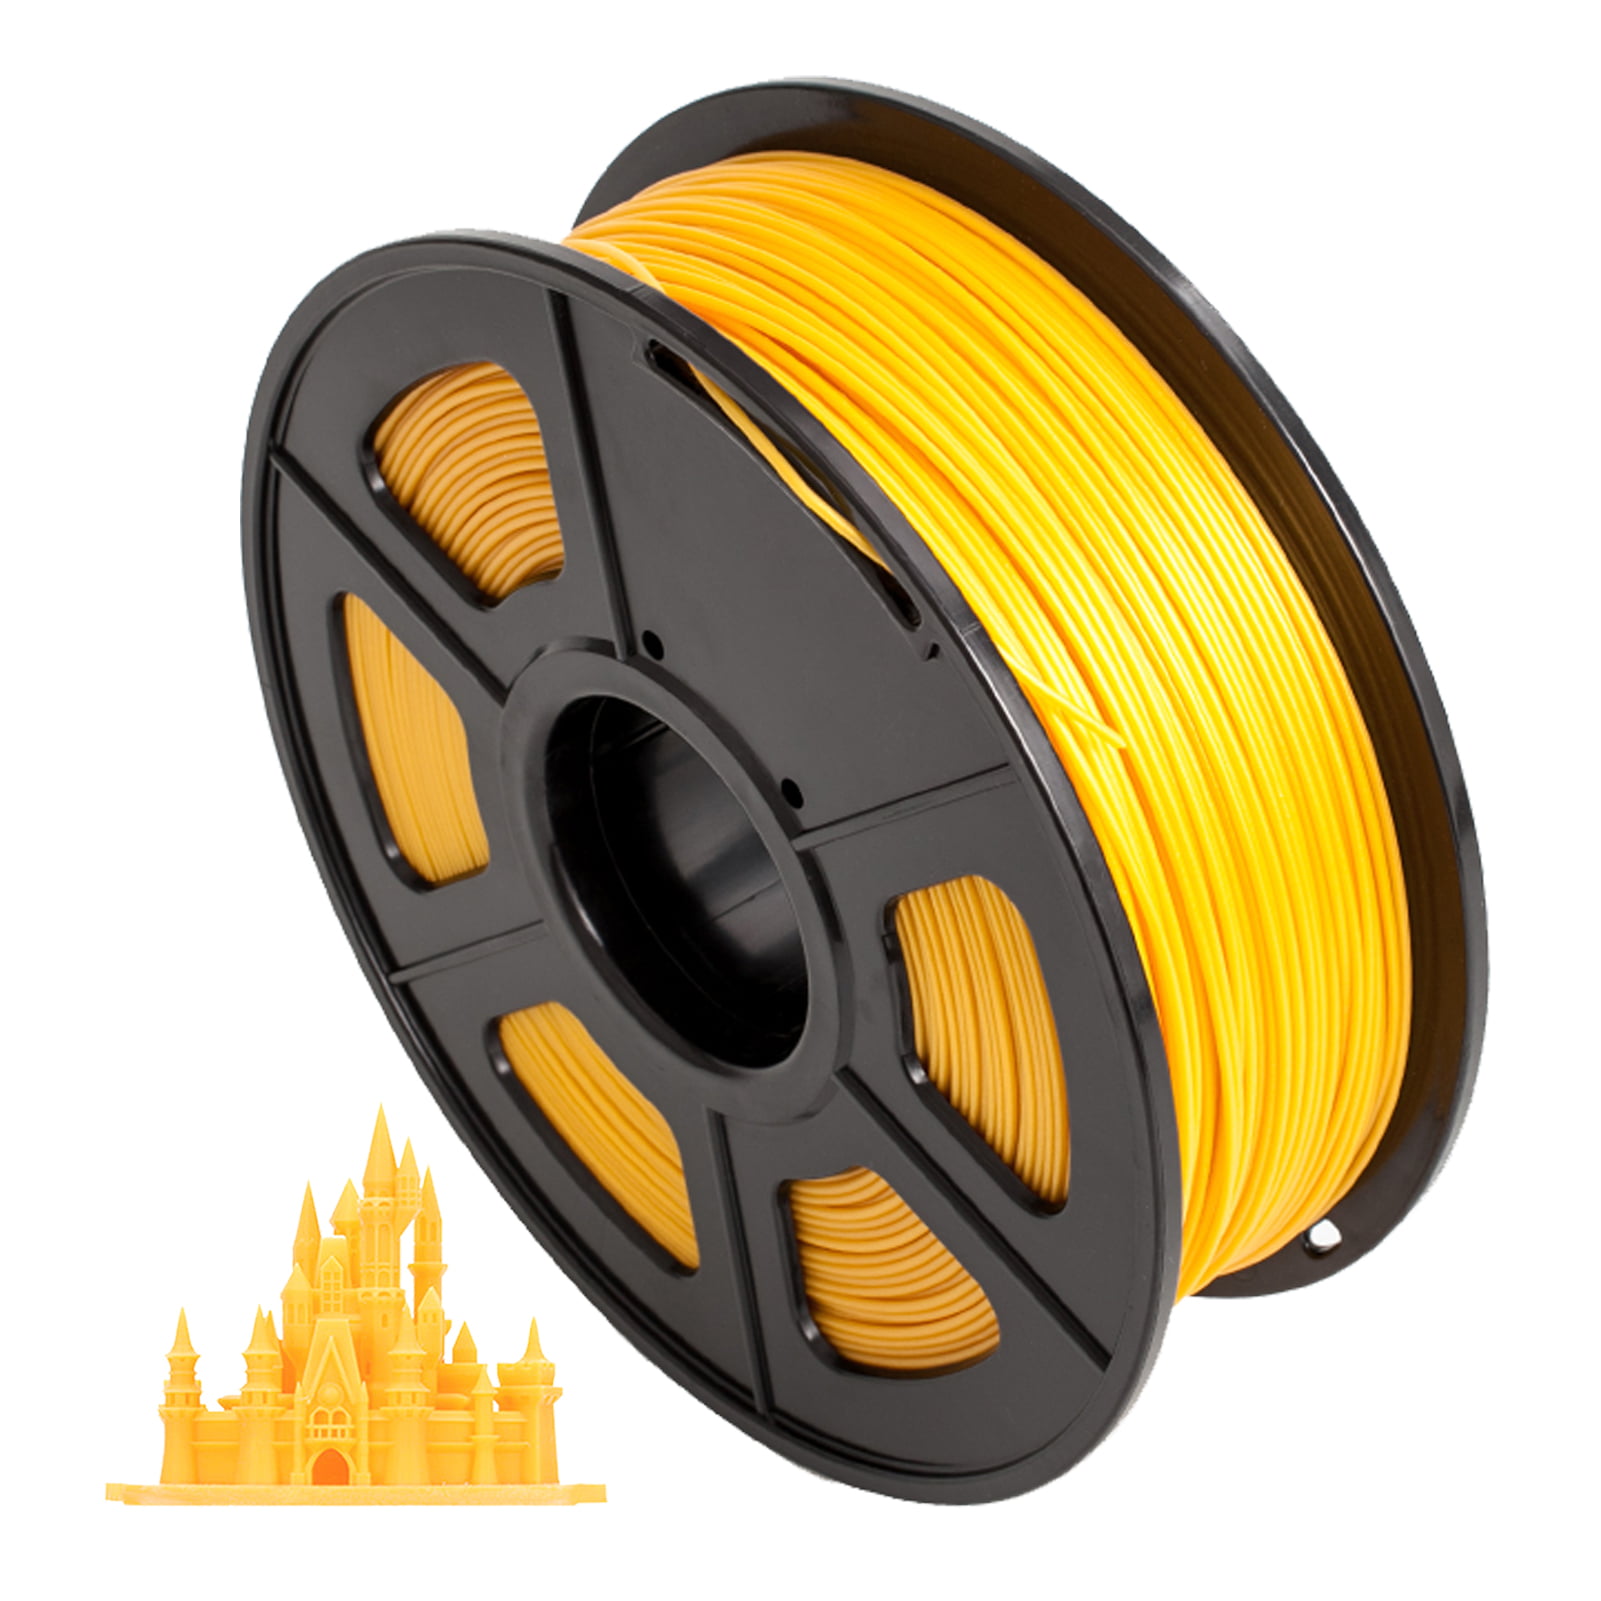 SUNLU PETG 3D filament 1.75mm 1KG 2.2lb PETG 3D Printer Filament Black PETG Dimensional Accuracy +/- 0.02 mm 1.75 mm 1 kg Spool